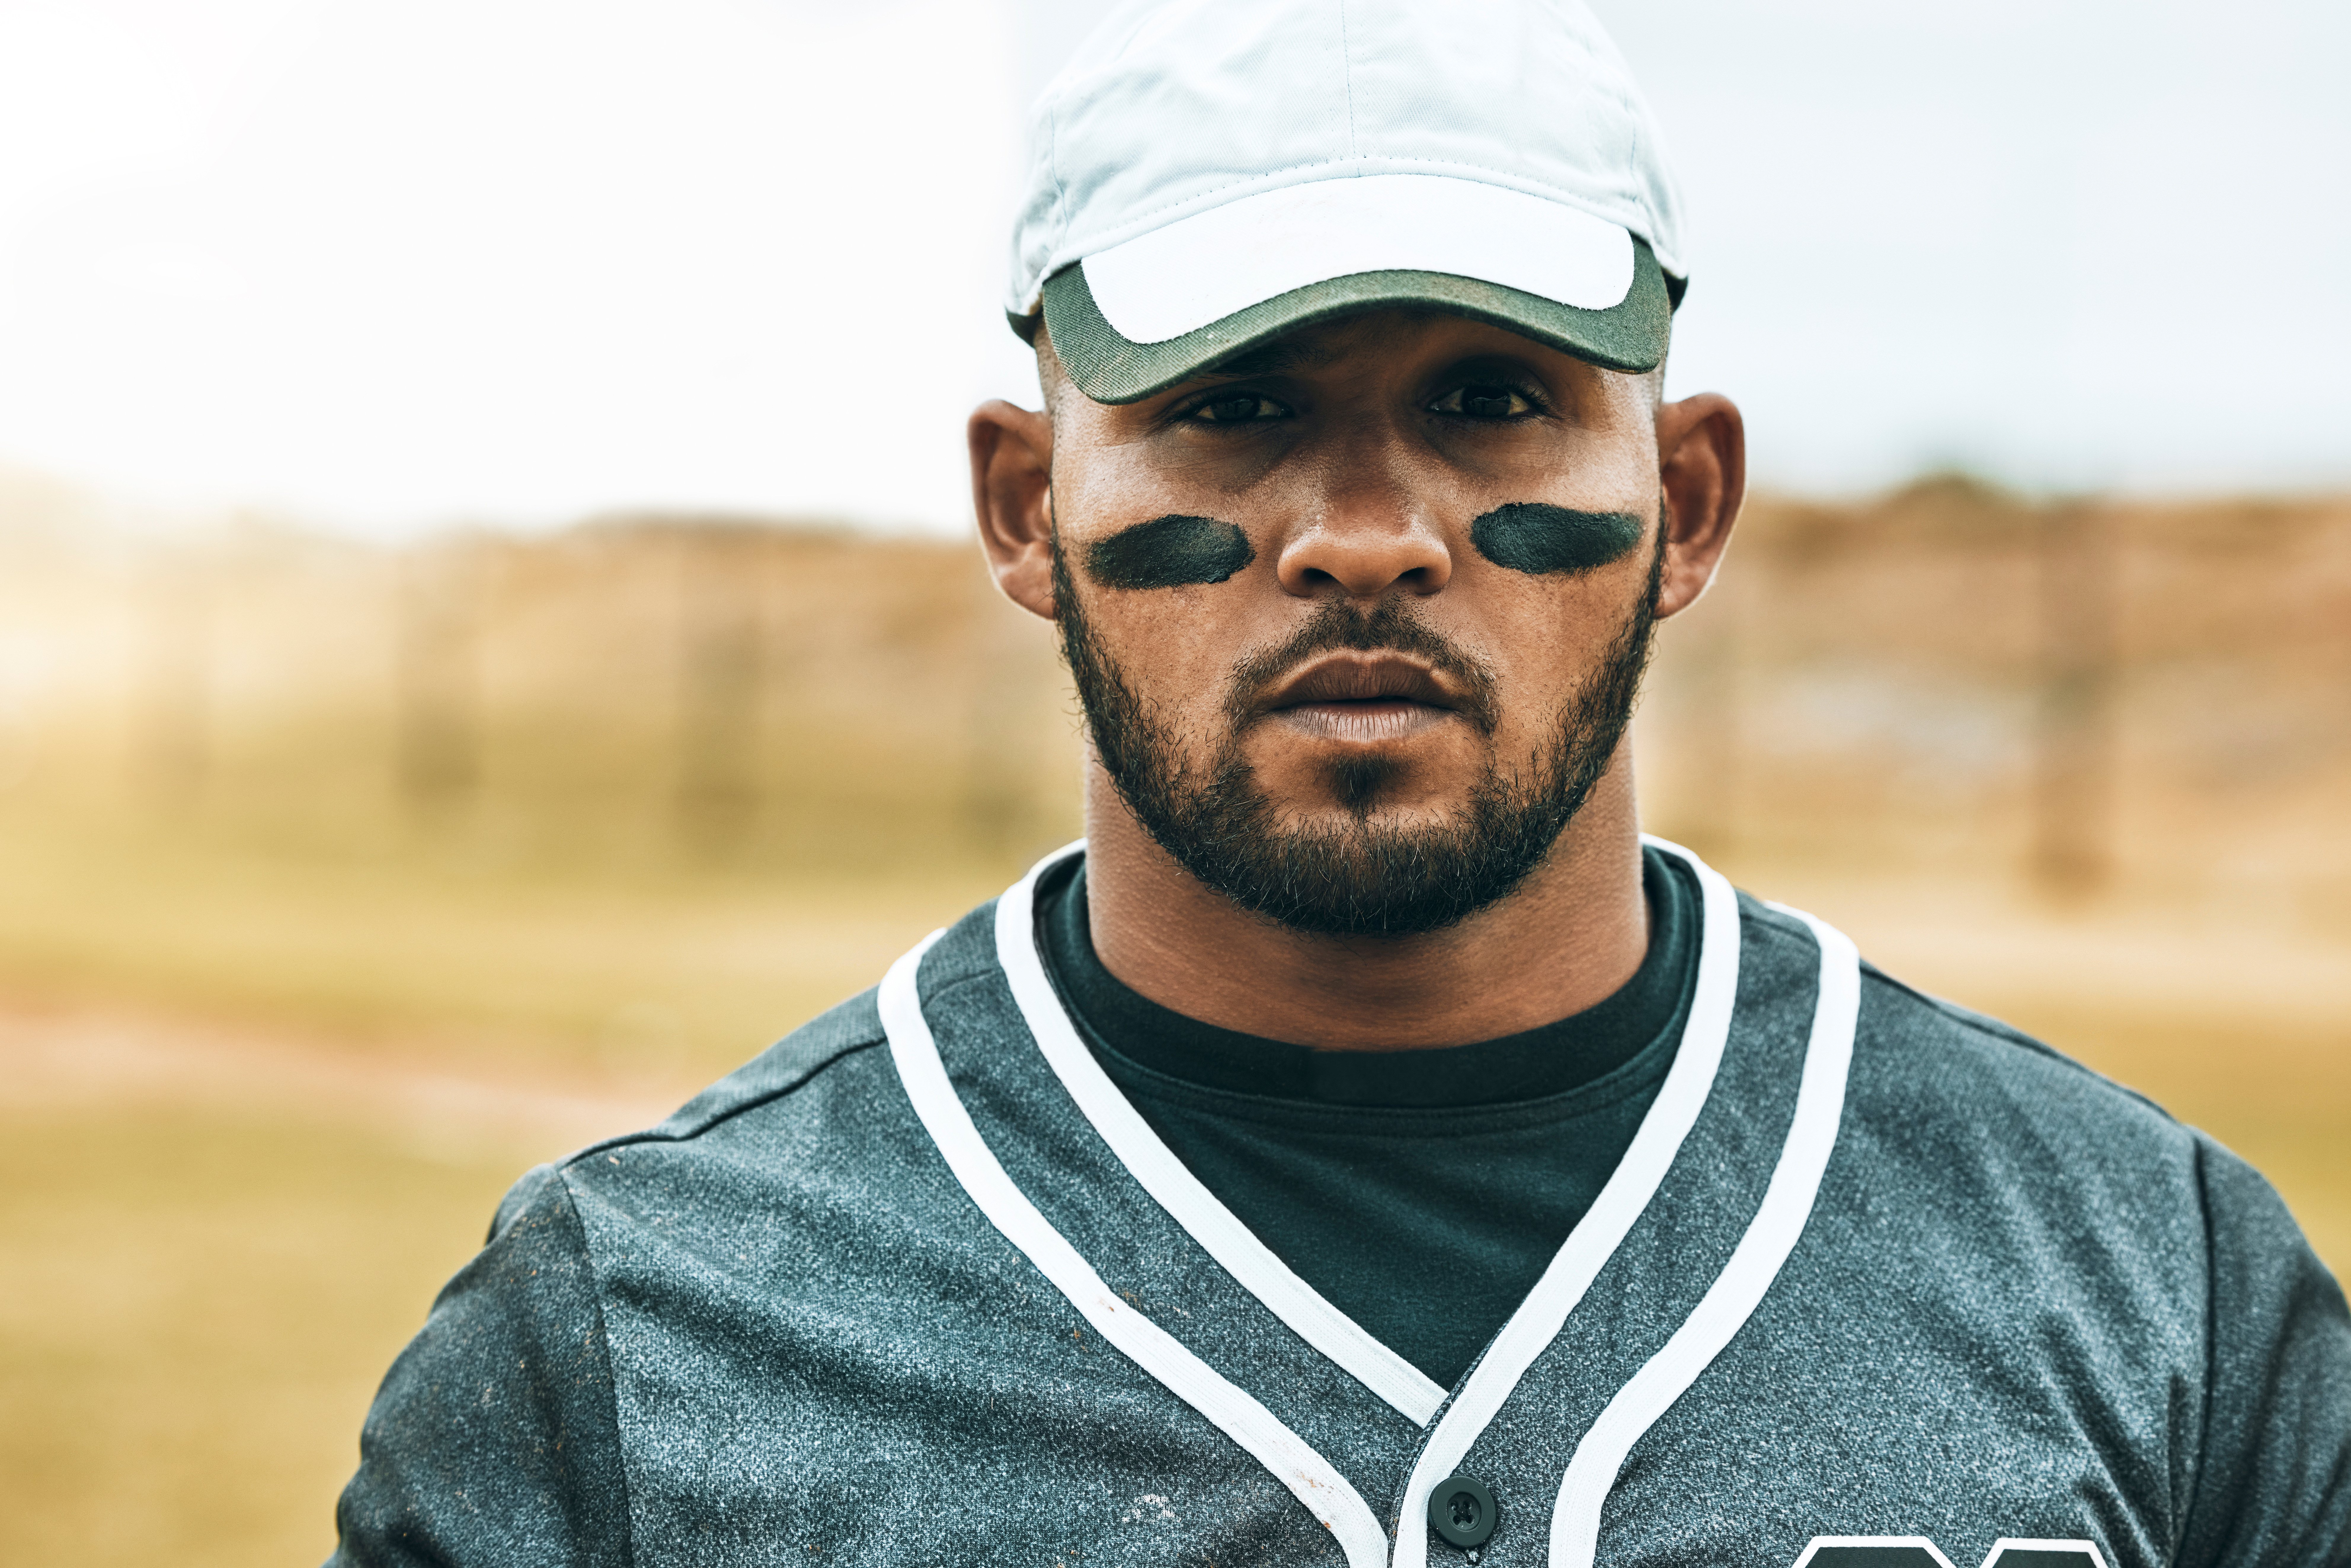 Why do Baseball Players Wear Eye Black?